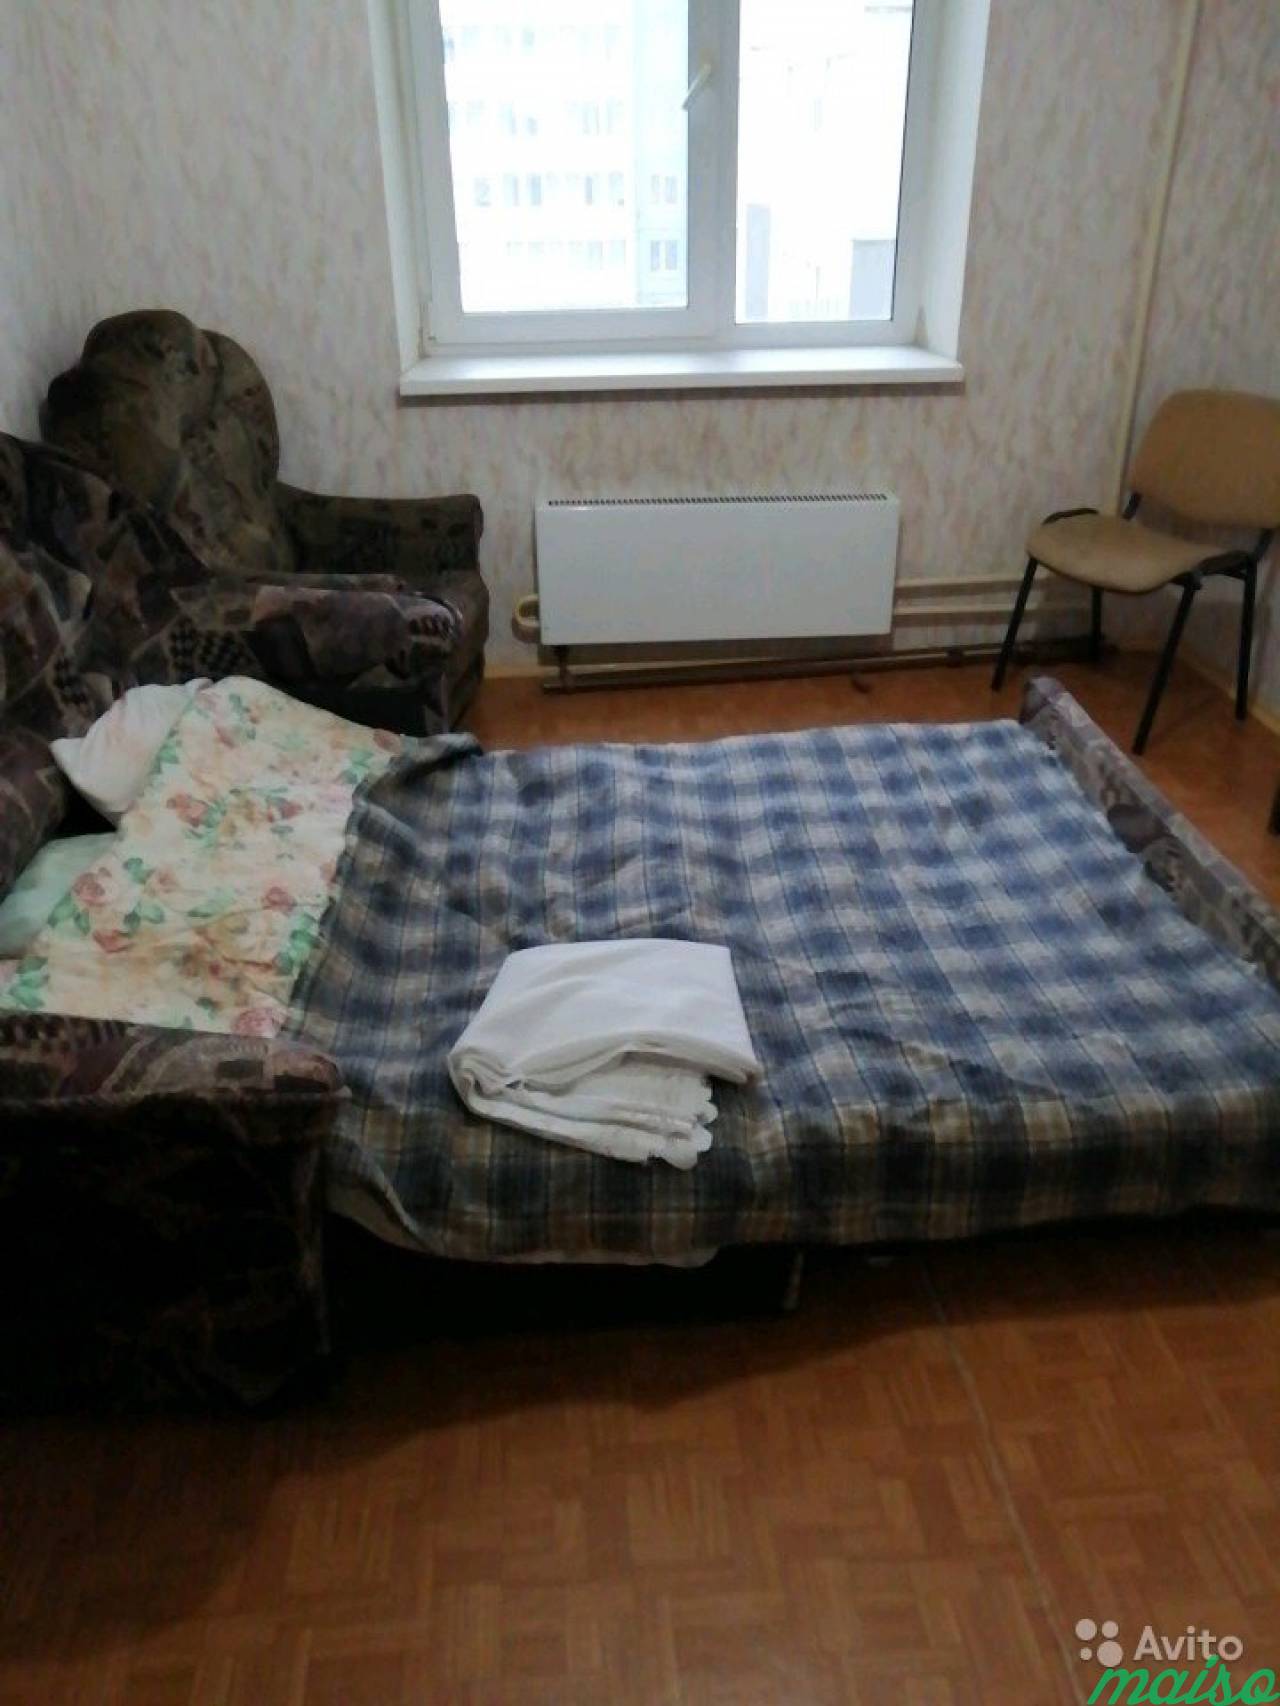 Комната 11 м² в 3-к, 3/10 эт. в Санкт-Петербурге. Фото 3